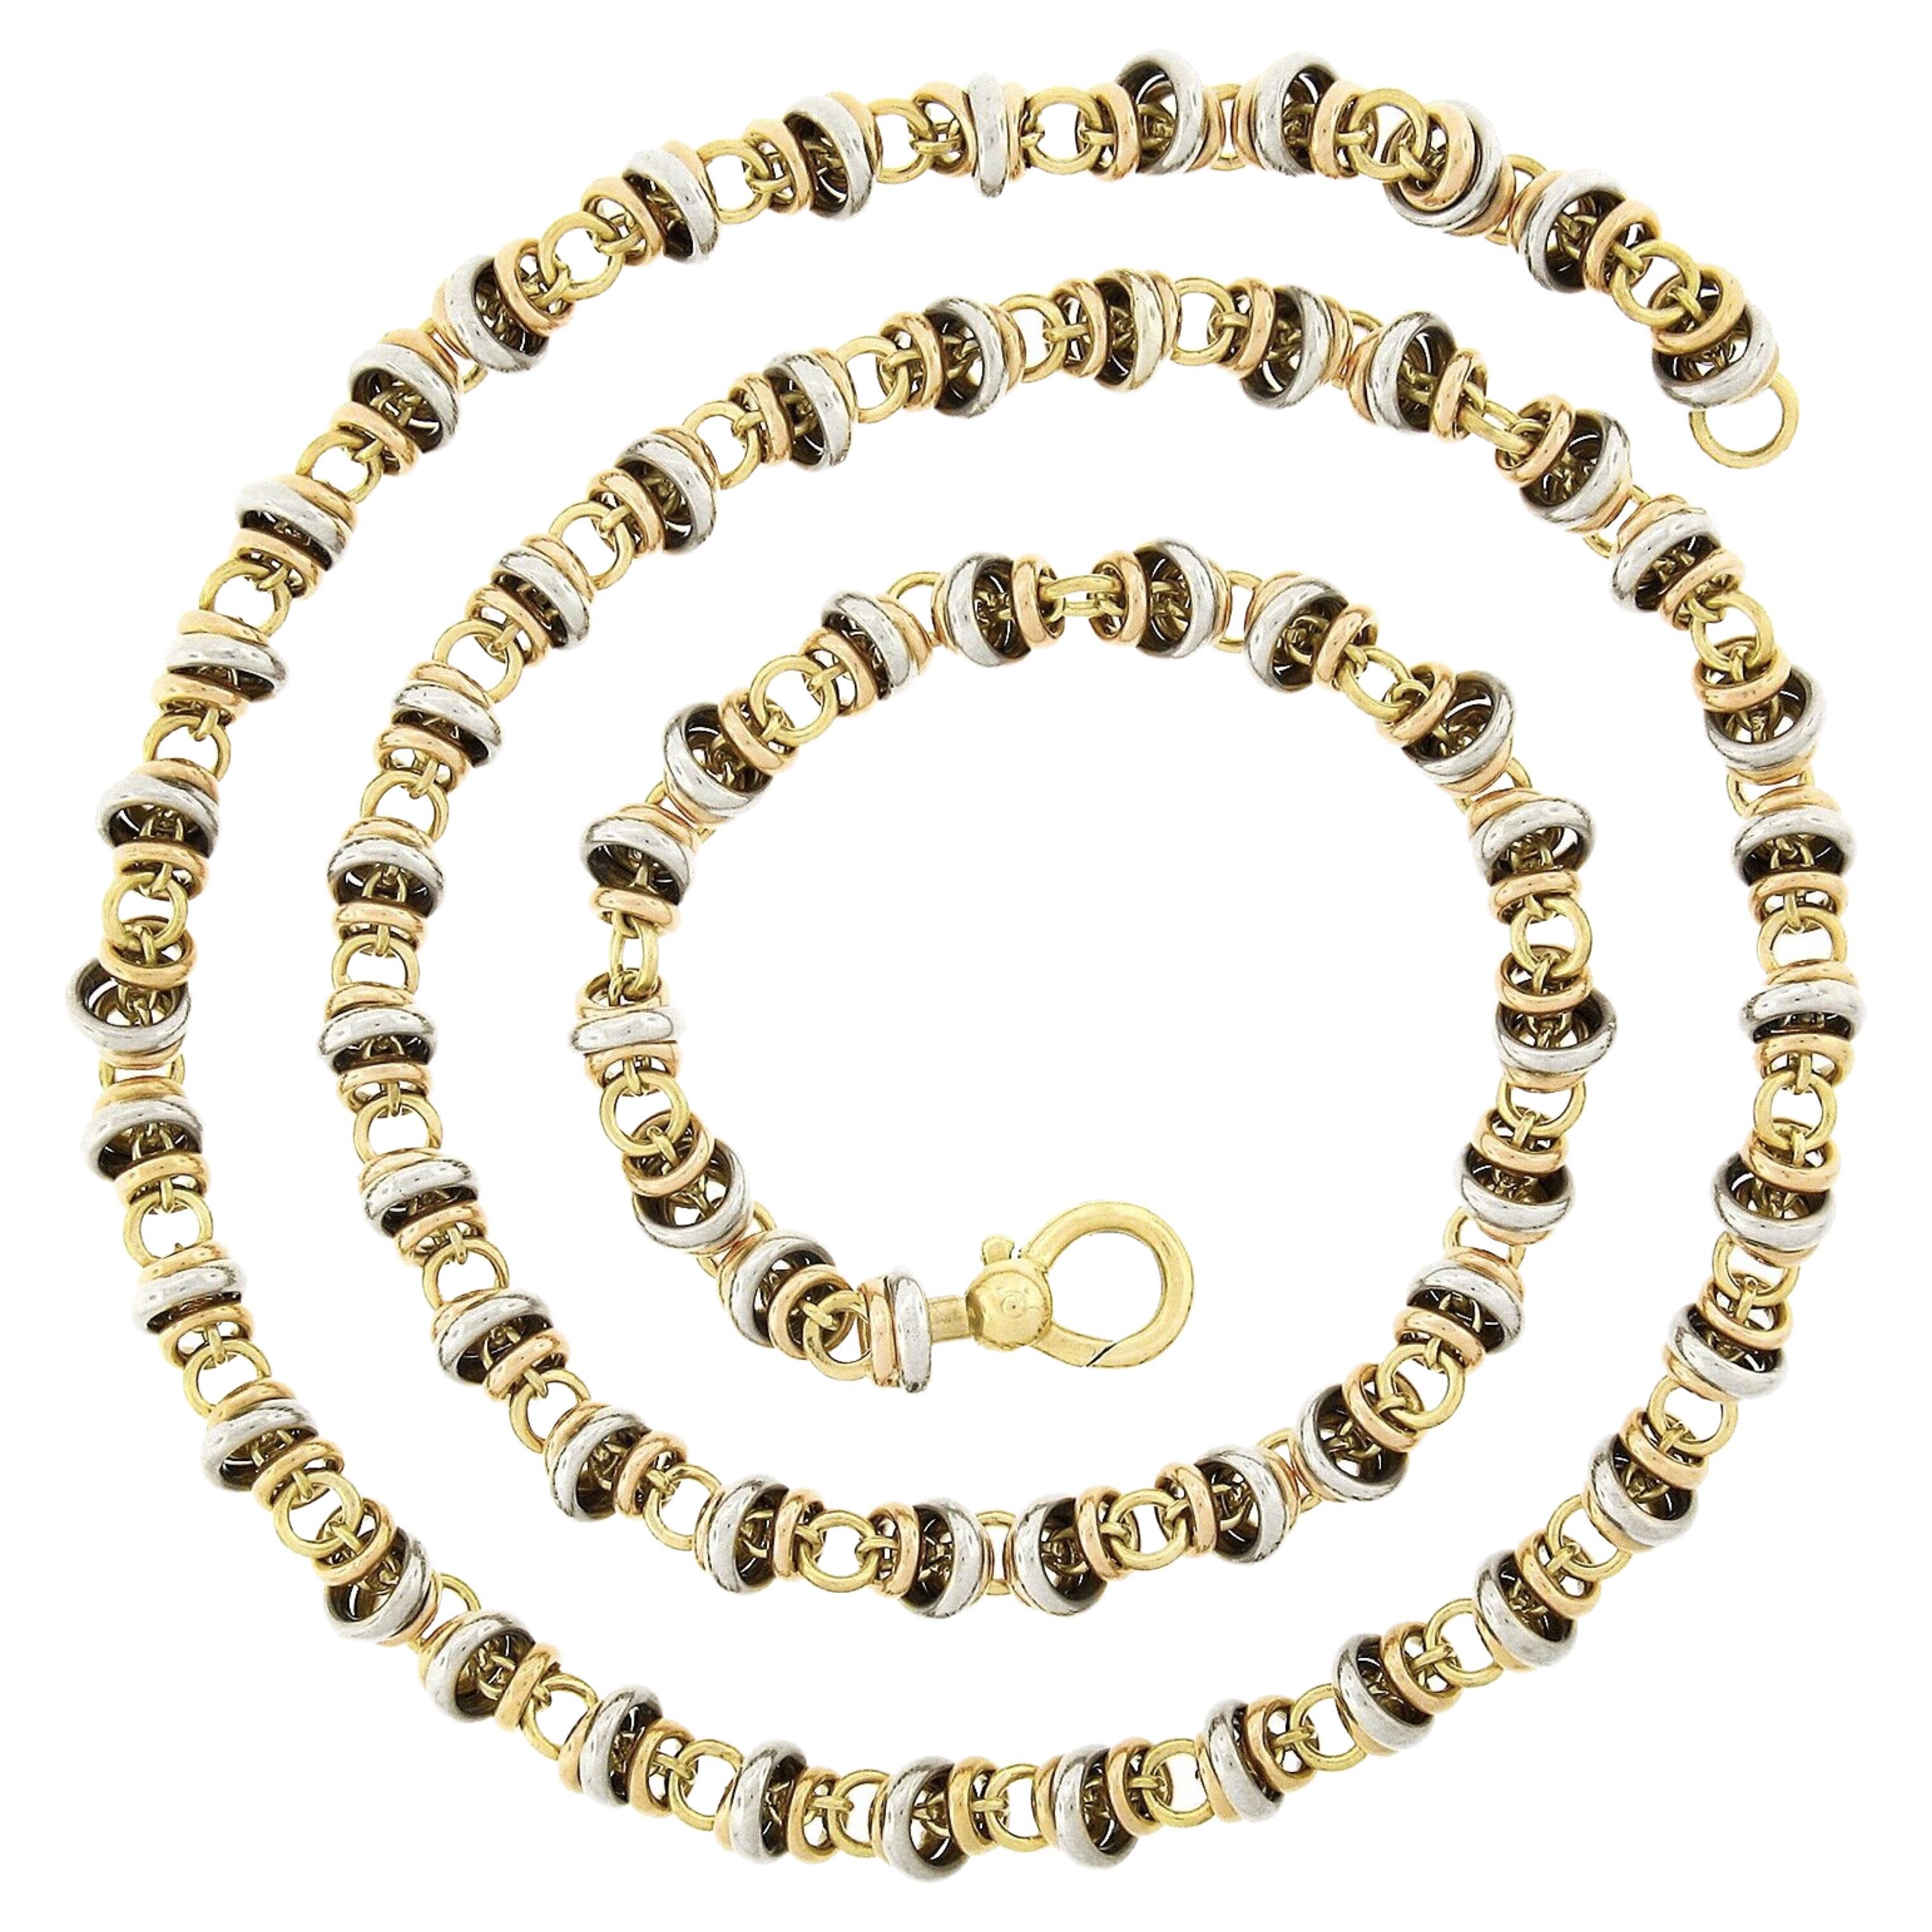 1990s Chain Necklaces